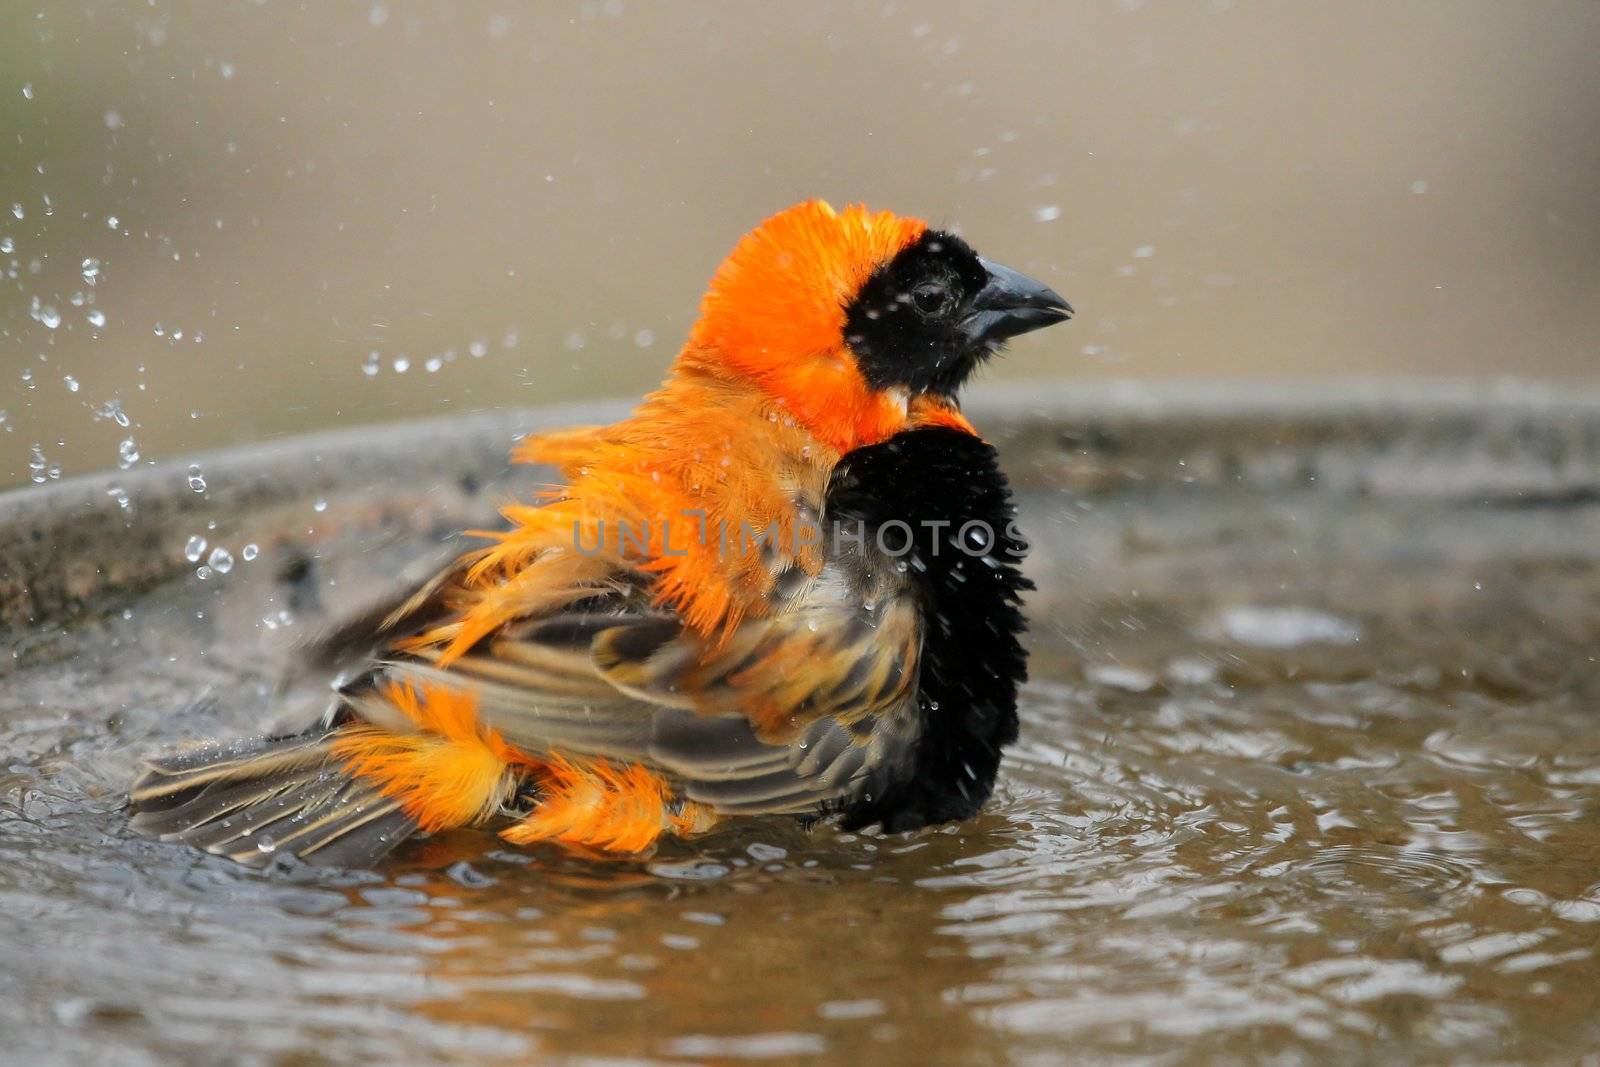 Bishop bird with bright orange and black plumage bathing in water